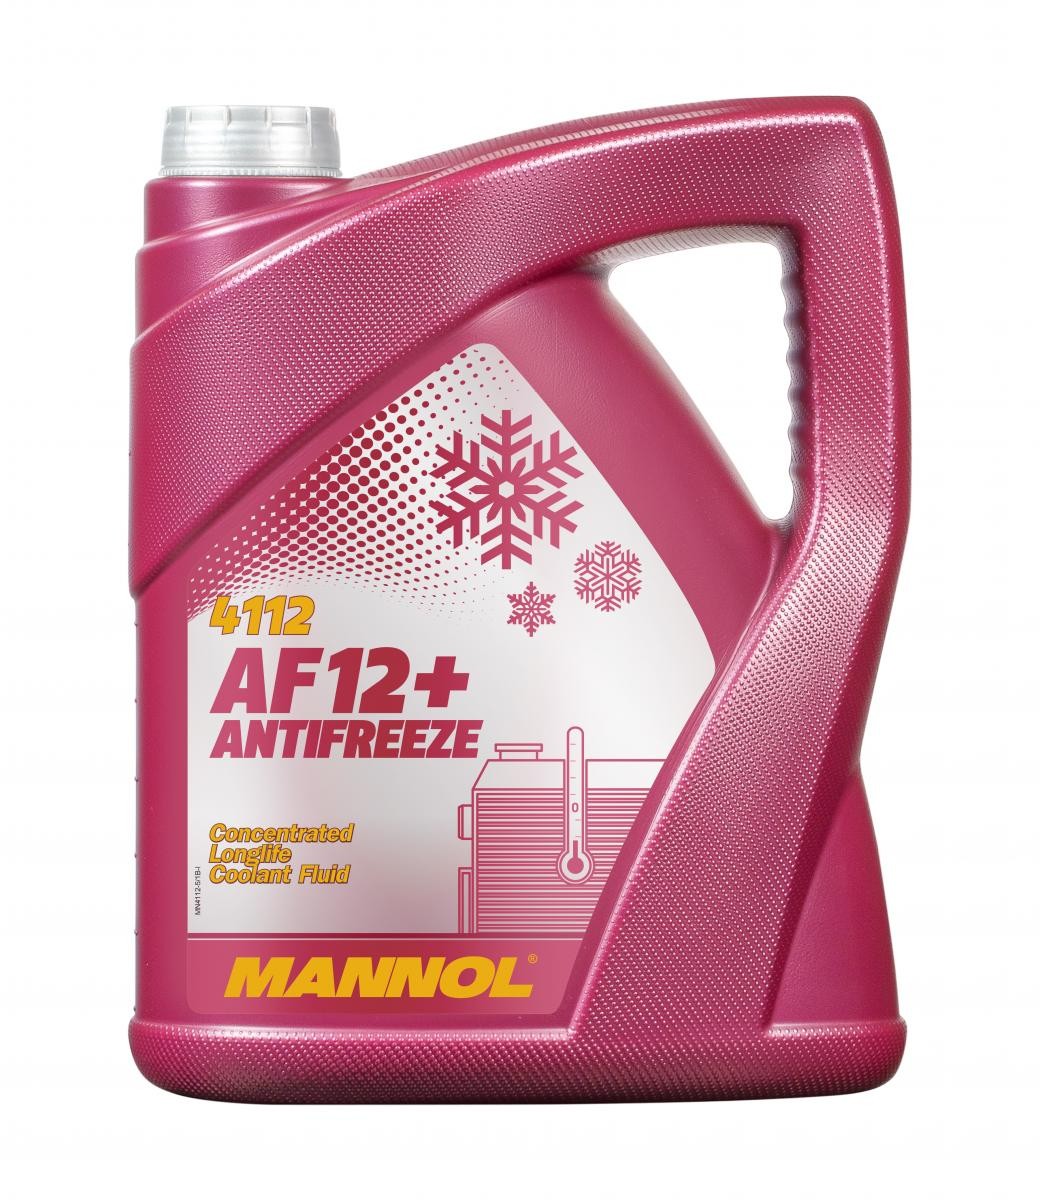 Pemco Kühlerfrostschutz Antifreeze 912+ ROT -40°C, 5 Liter : :  Auto & Motorrad